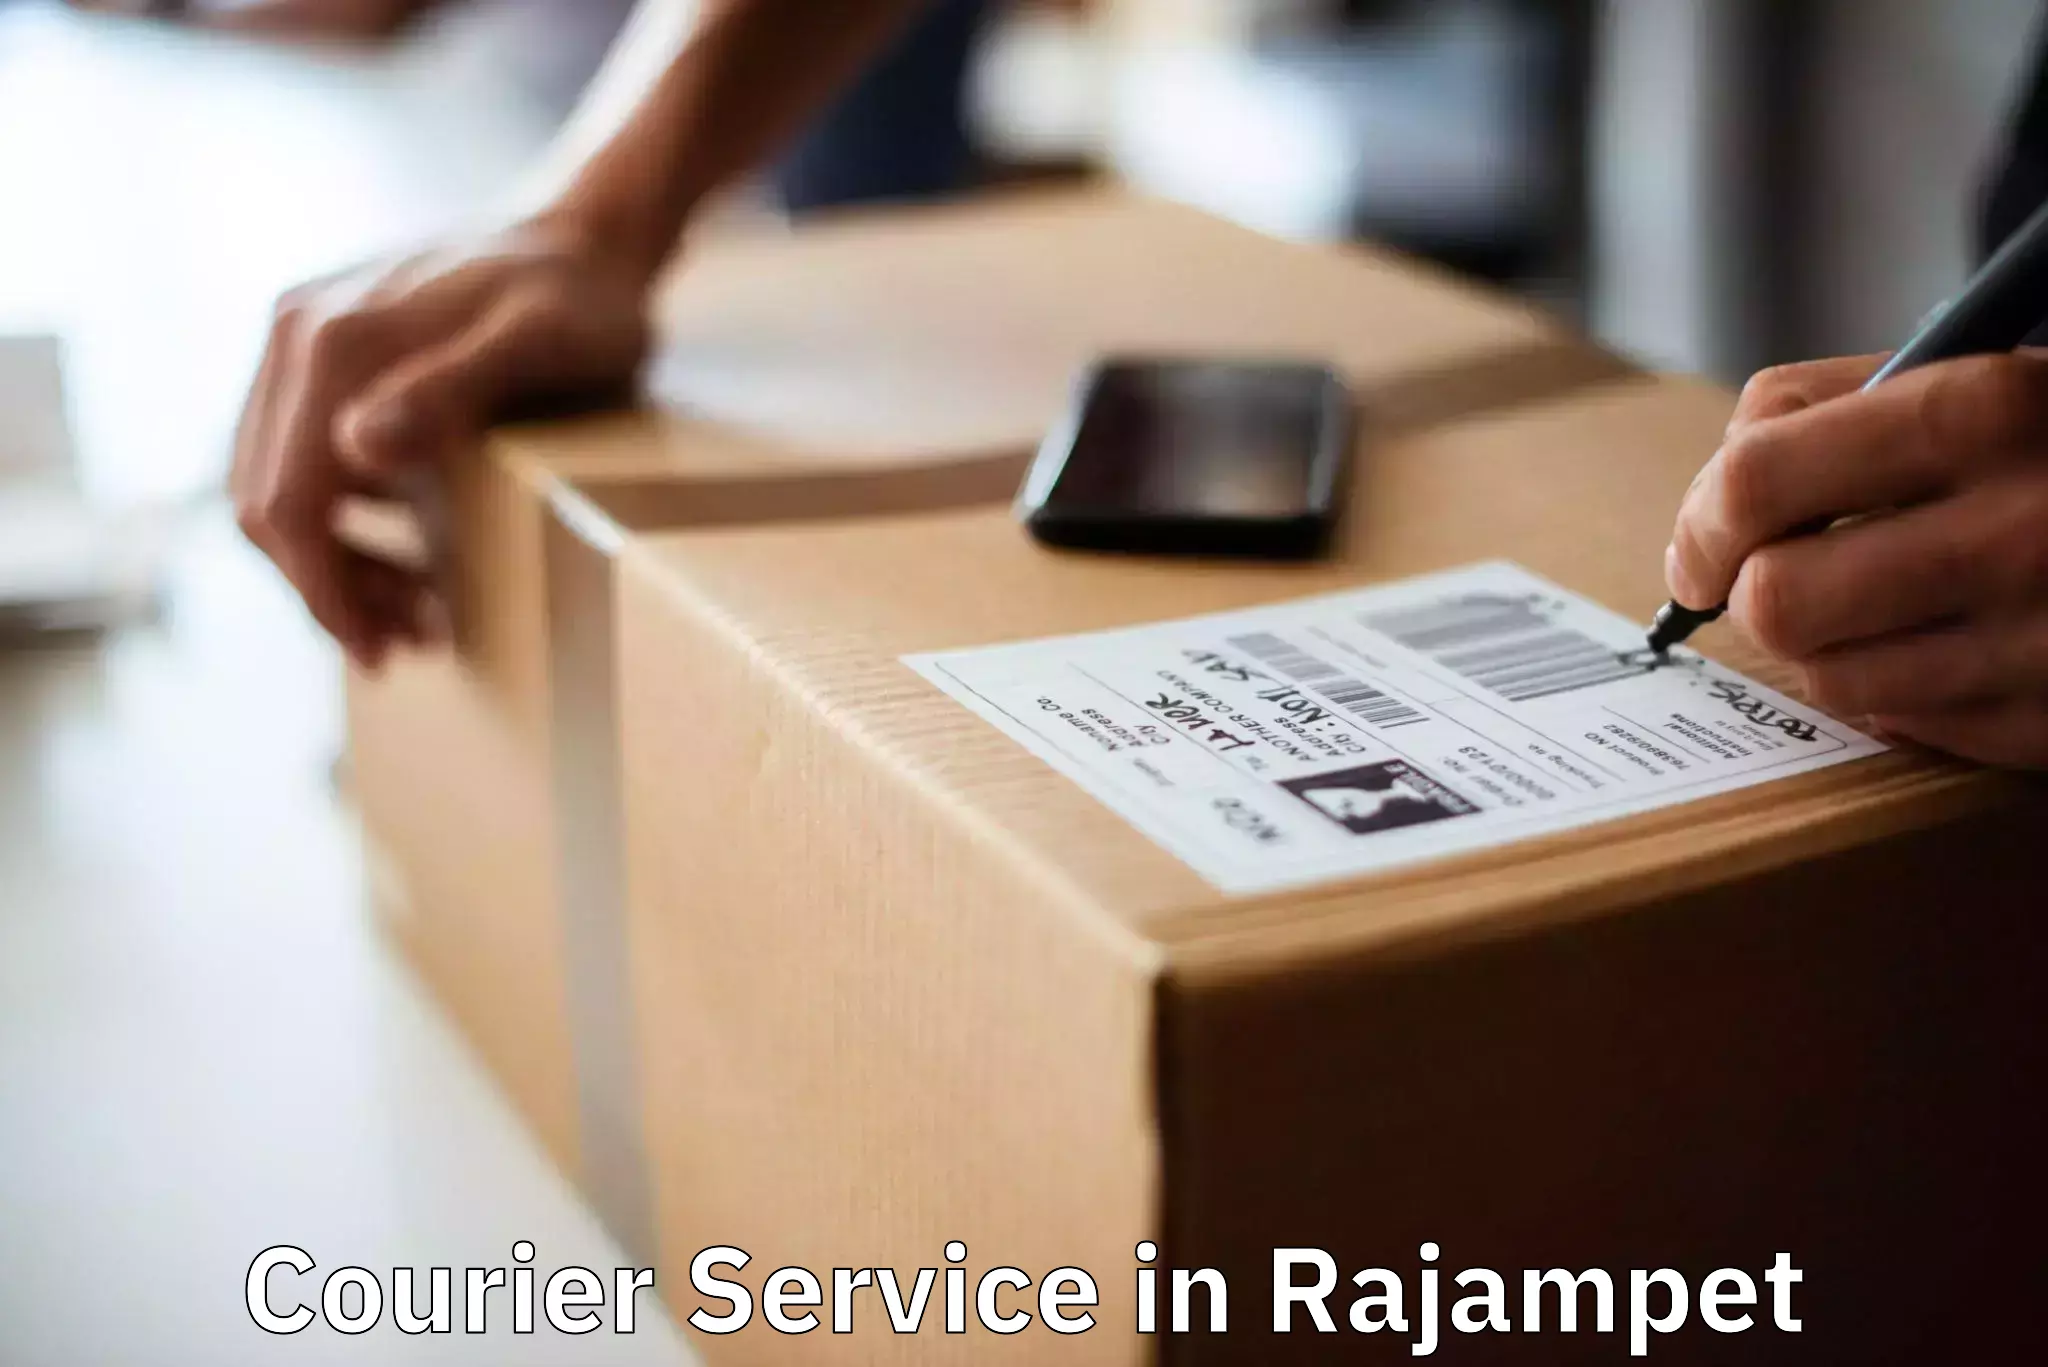 Bulk shipping discounts in Rajampet